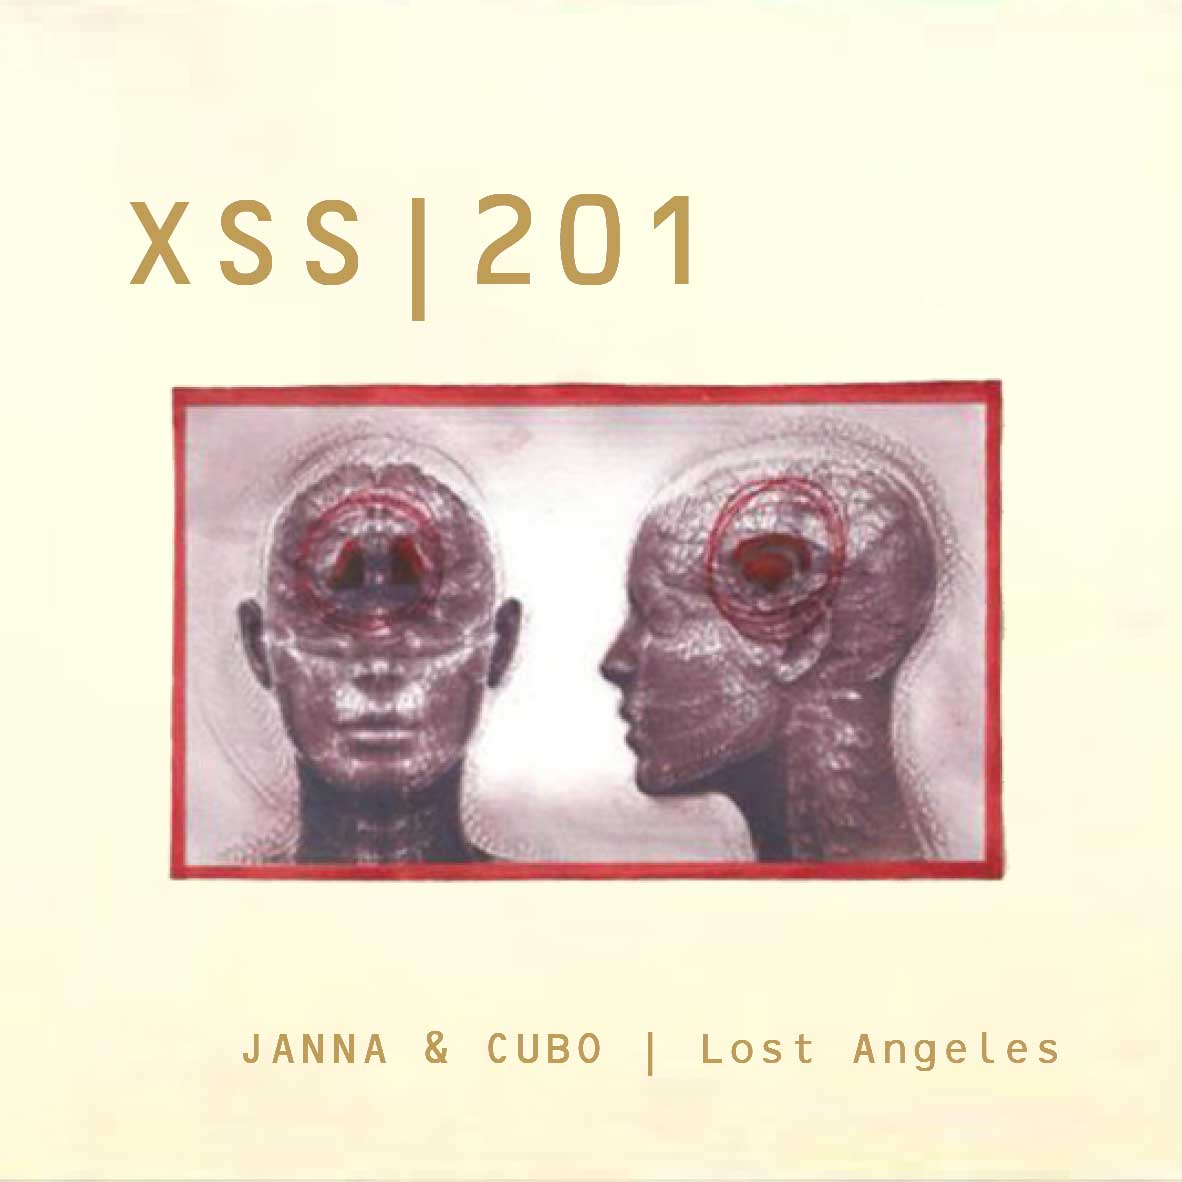 XSS201 | Janna & Cubo | Lost Angeles